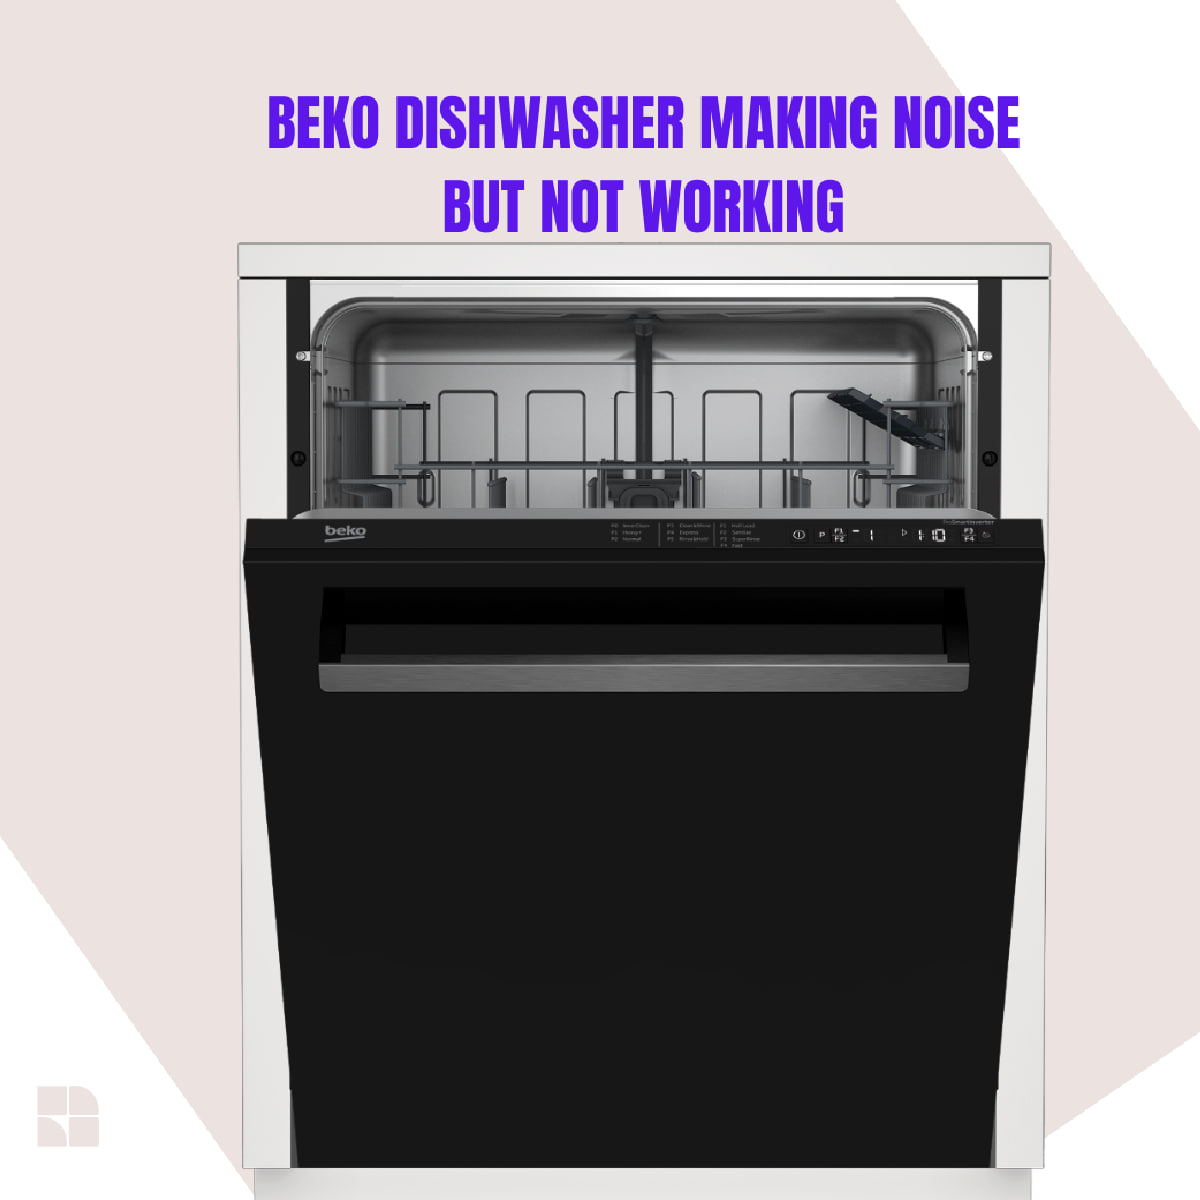 Beko dishwasher making noise but not working